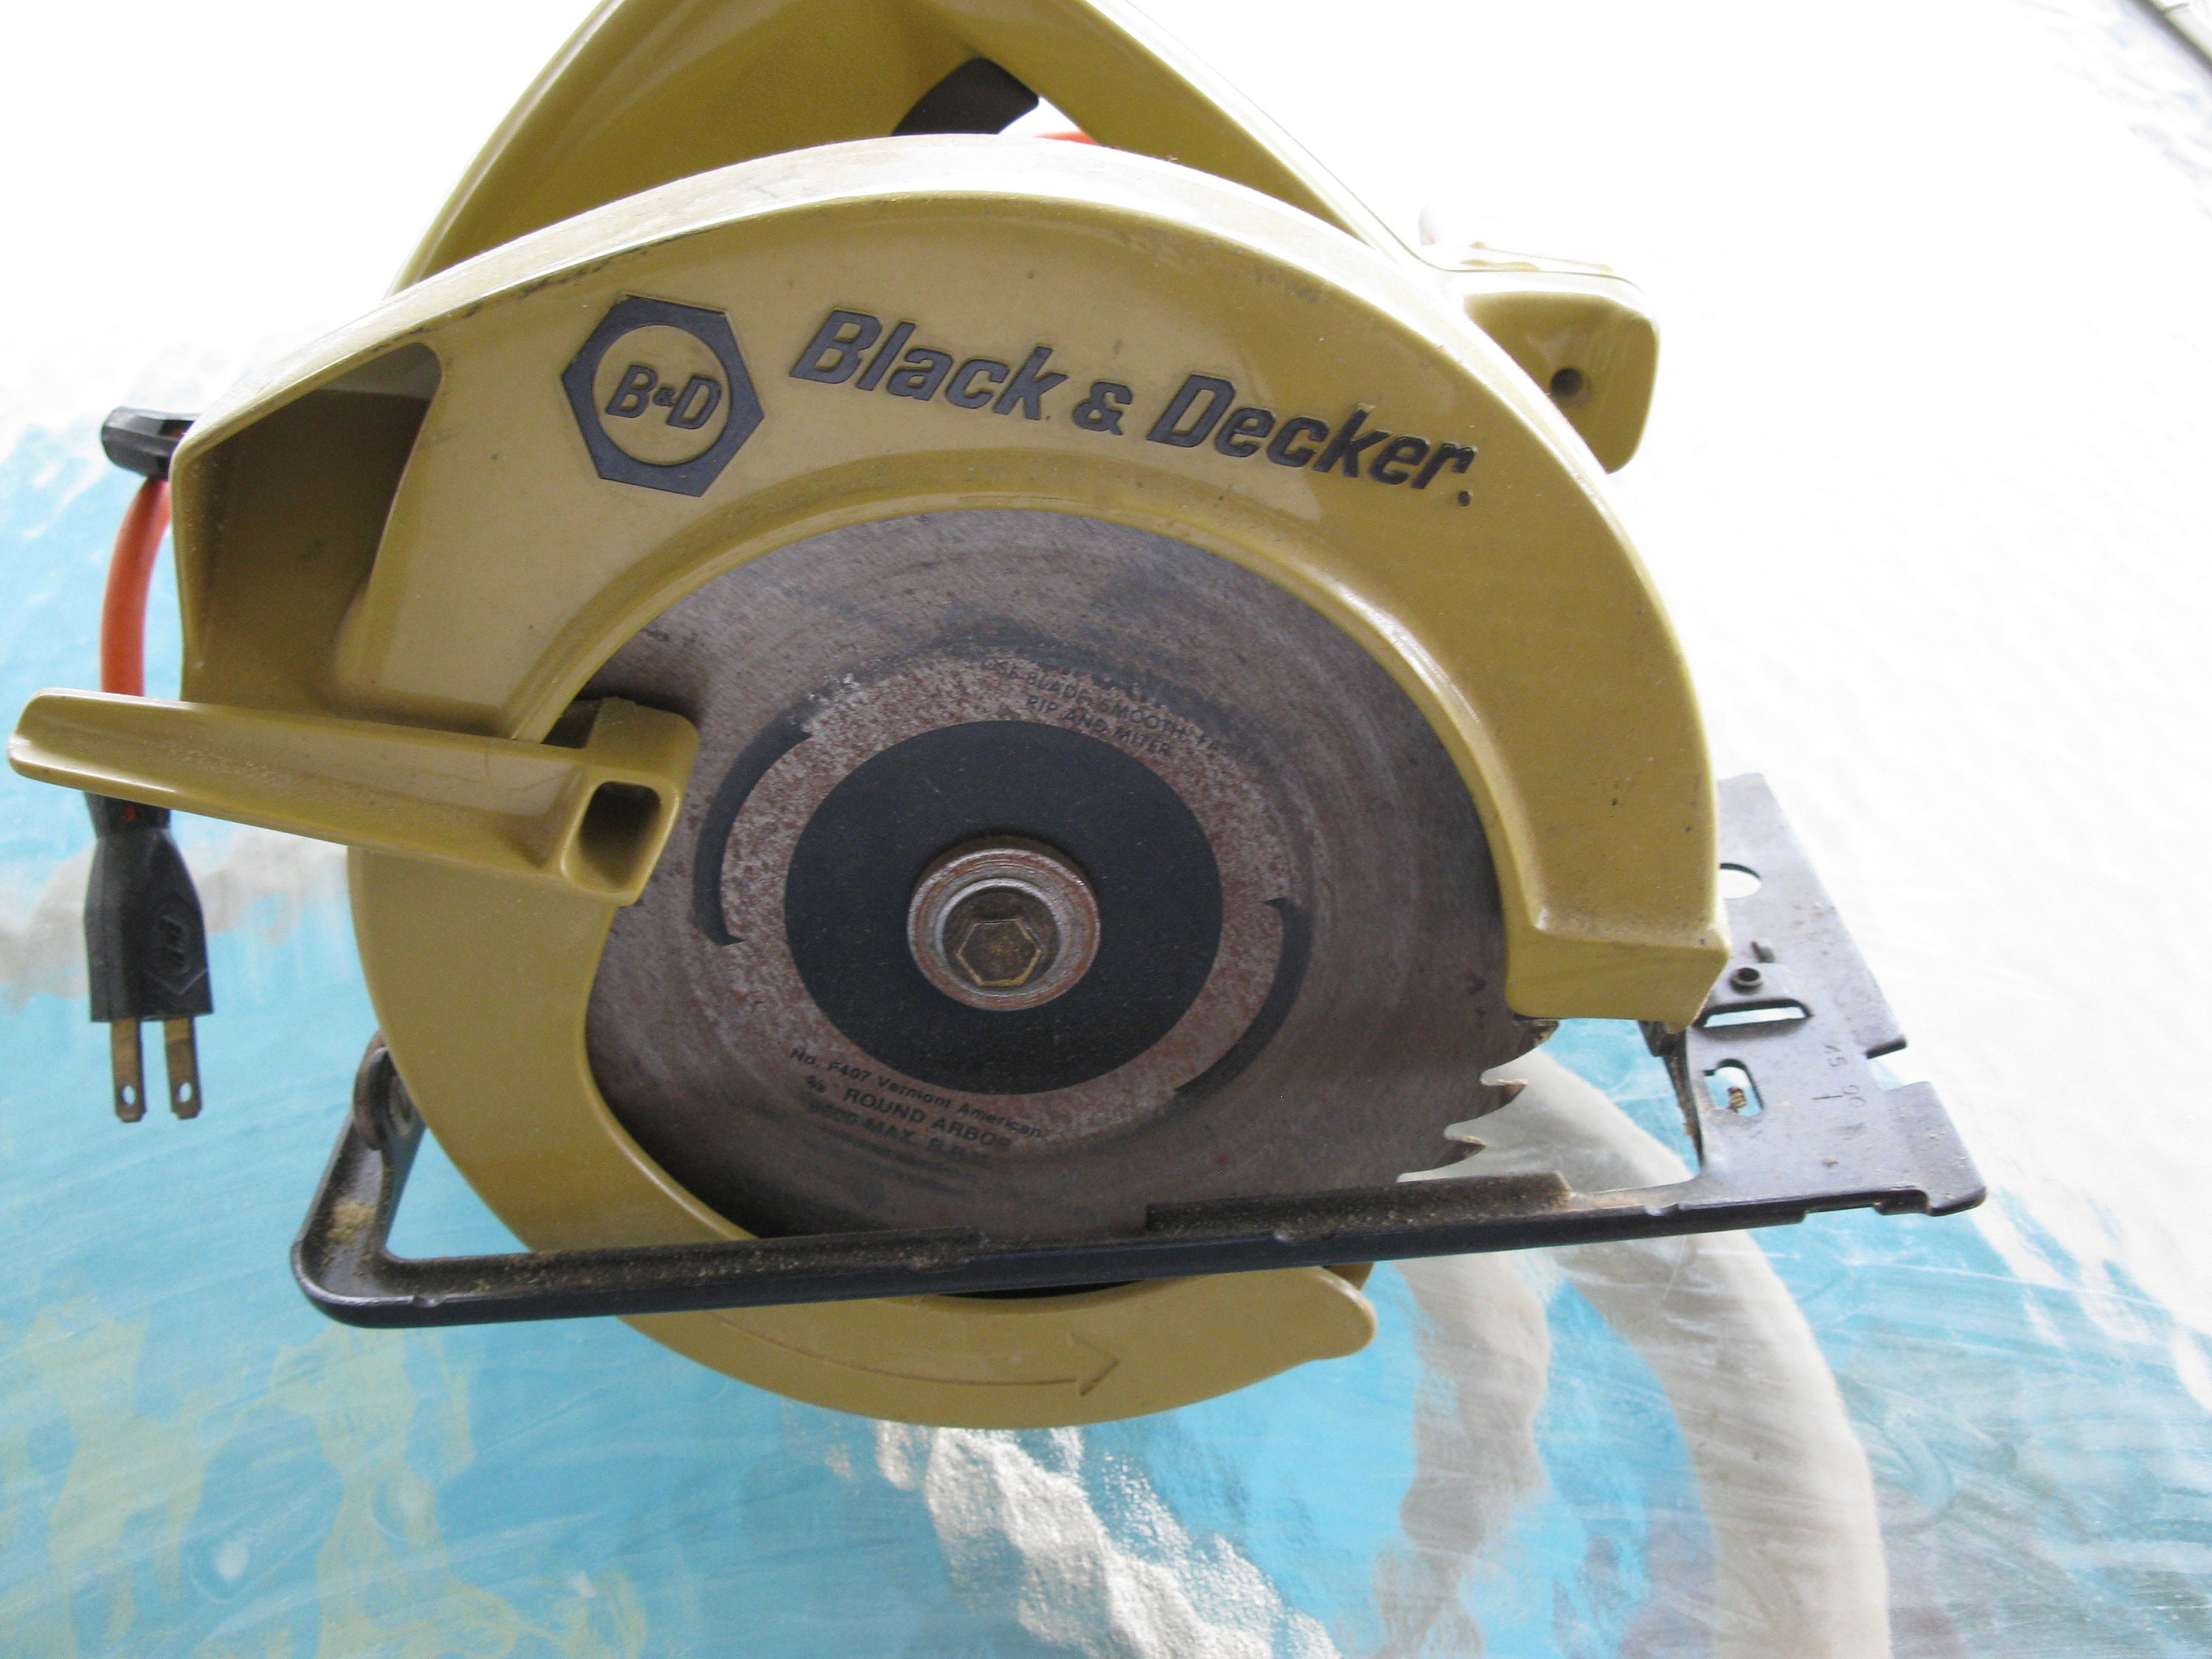 VINTAGE BLACK & DECKER 7-1/4” CIRCULAR SAW, MODEL 7310 w/ METAL CASE